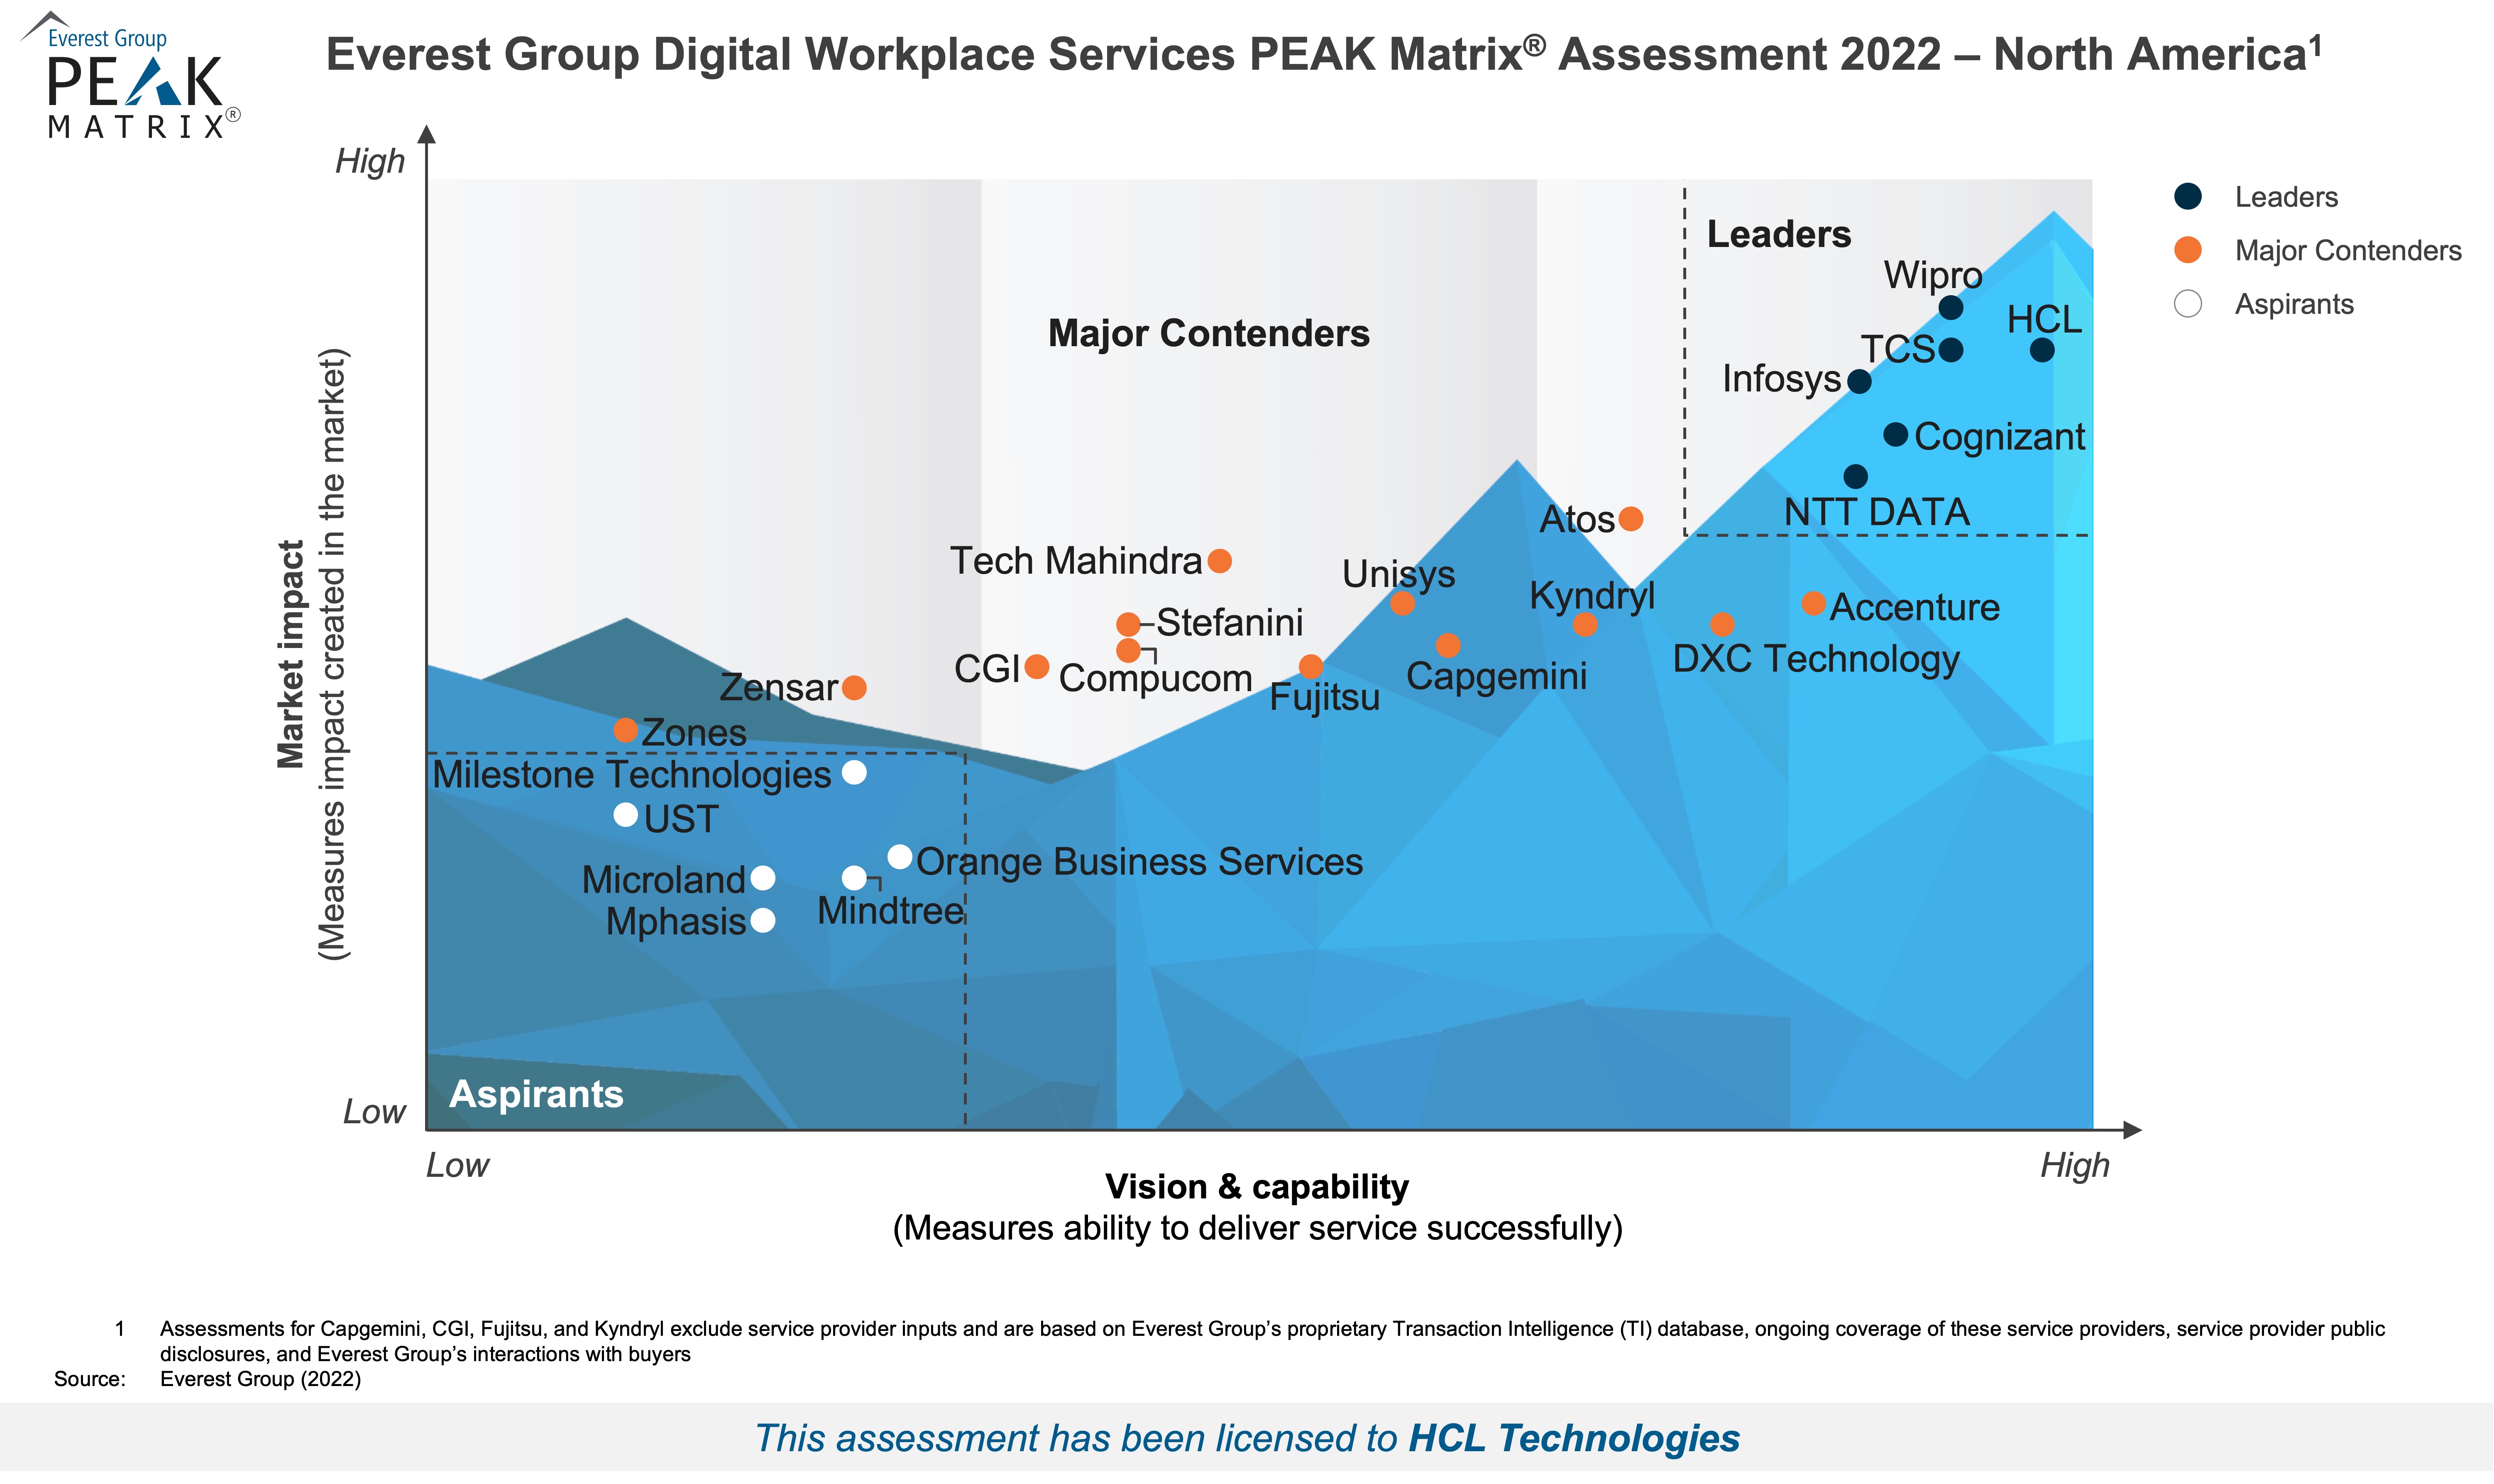 Digital Workplace Services Provider 2022 – North America